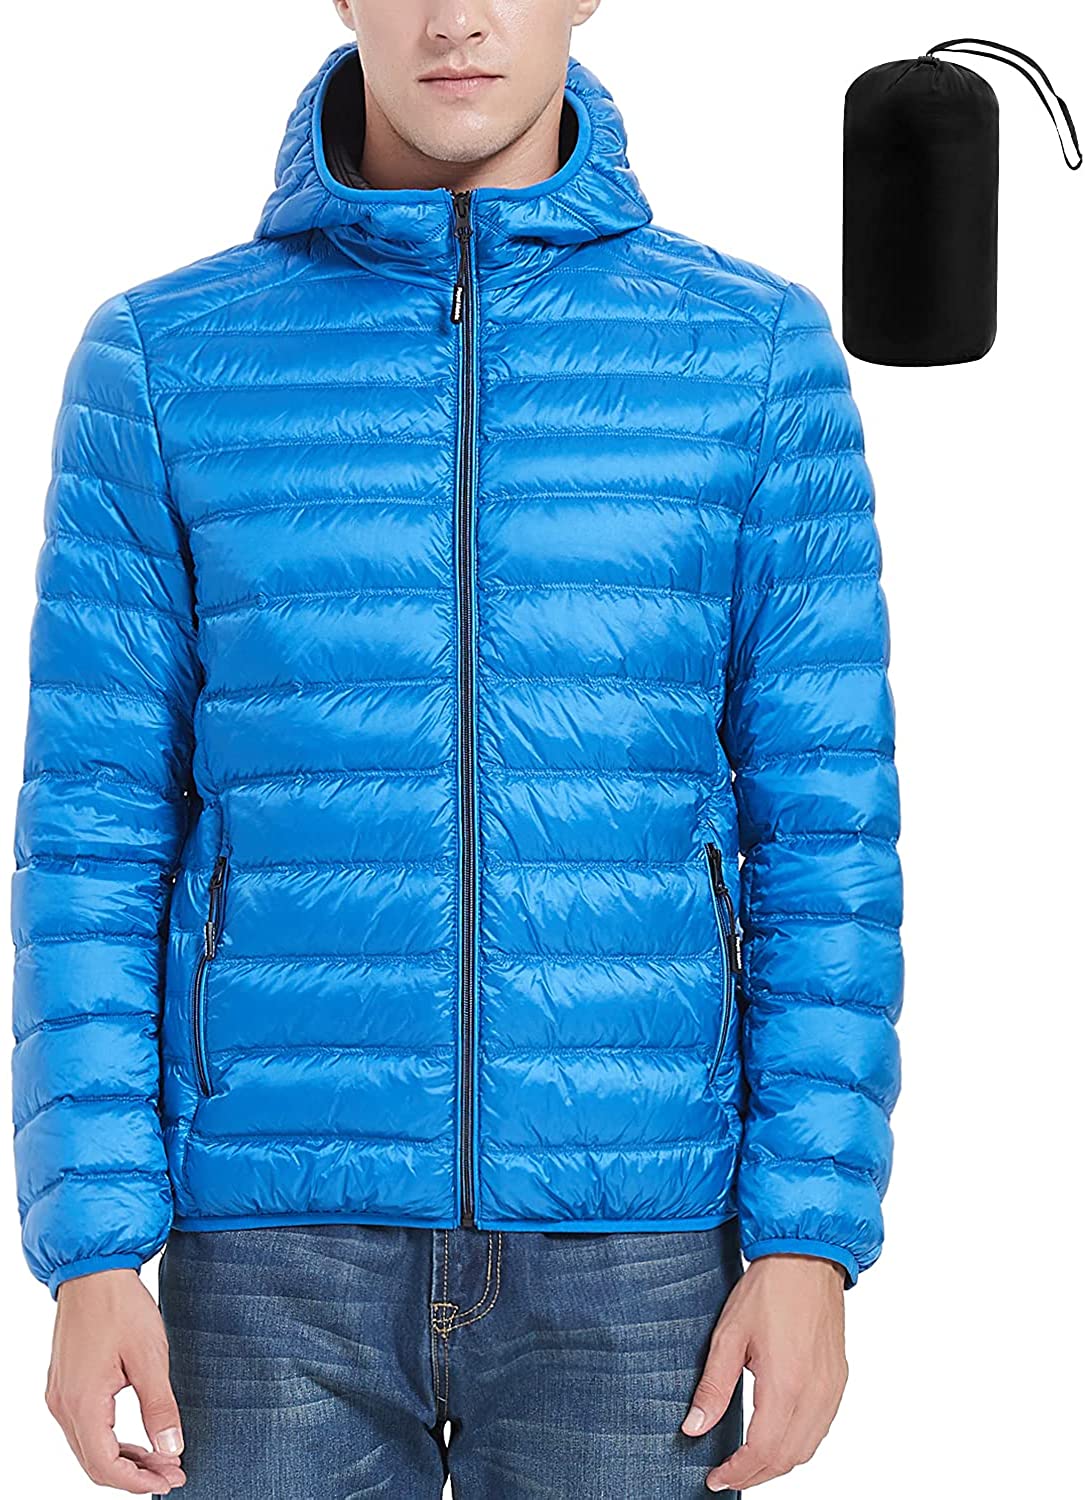 LEEy-world Jackets for Men Hoodie Mens Packable Puffer Jacket Lightweight  Water-Resistant Quilted Puffy Outerwear Dark Blue,XXL 